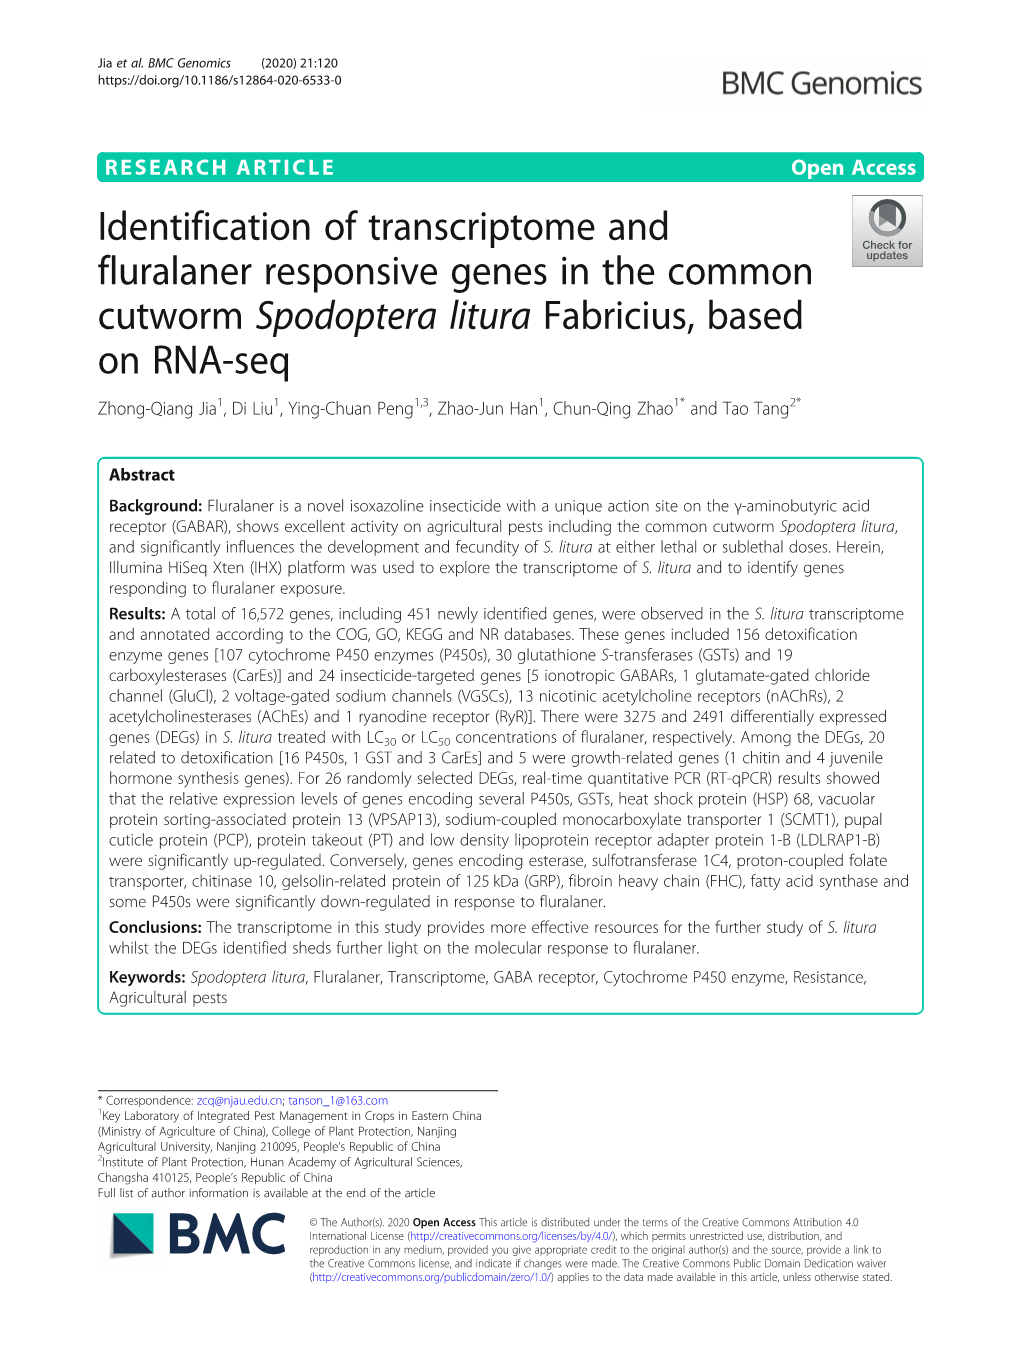 Identification of Transcriptome and Fluralaner Responsive Genes in The